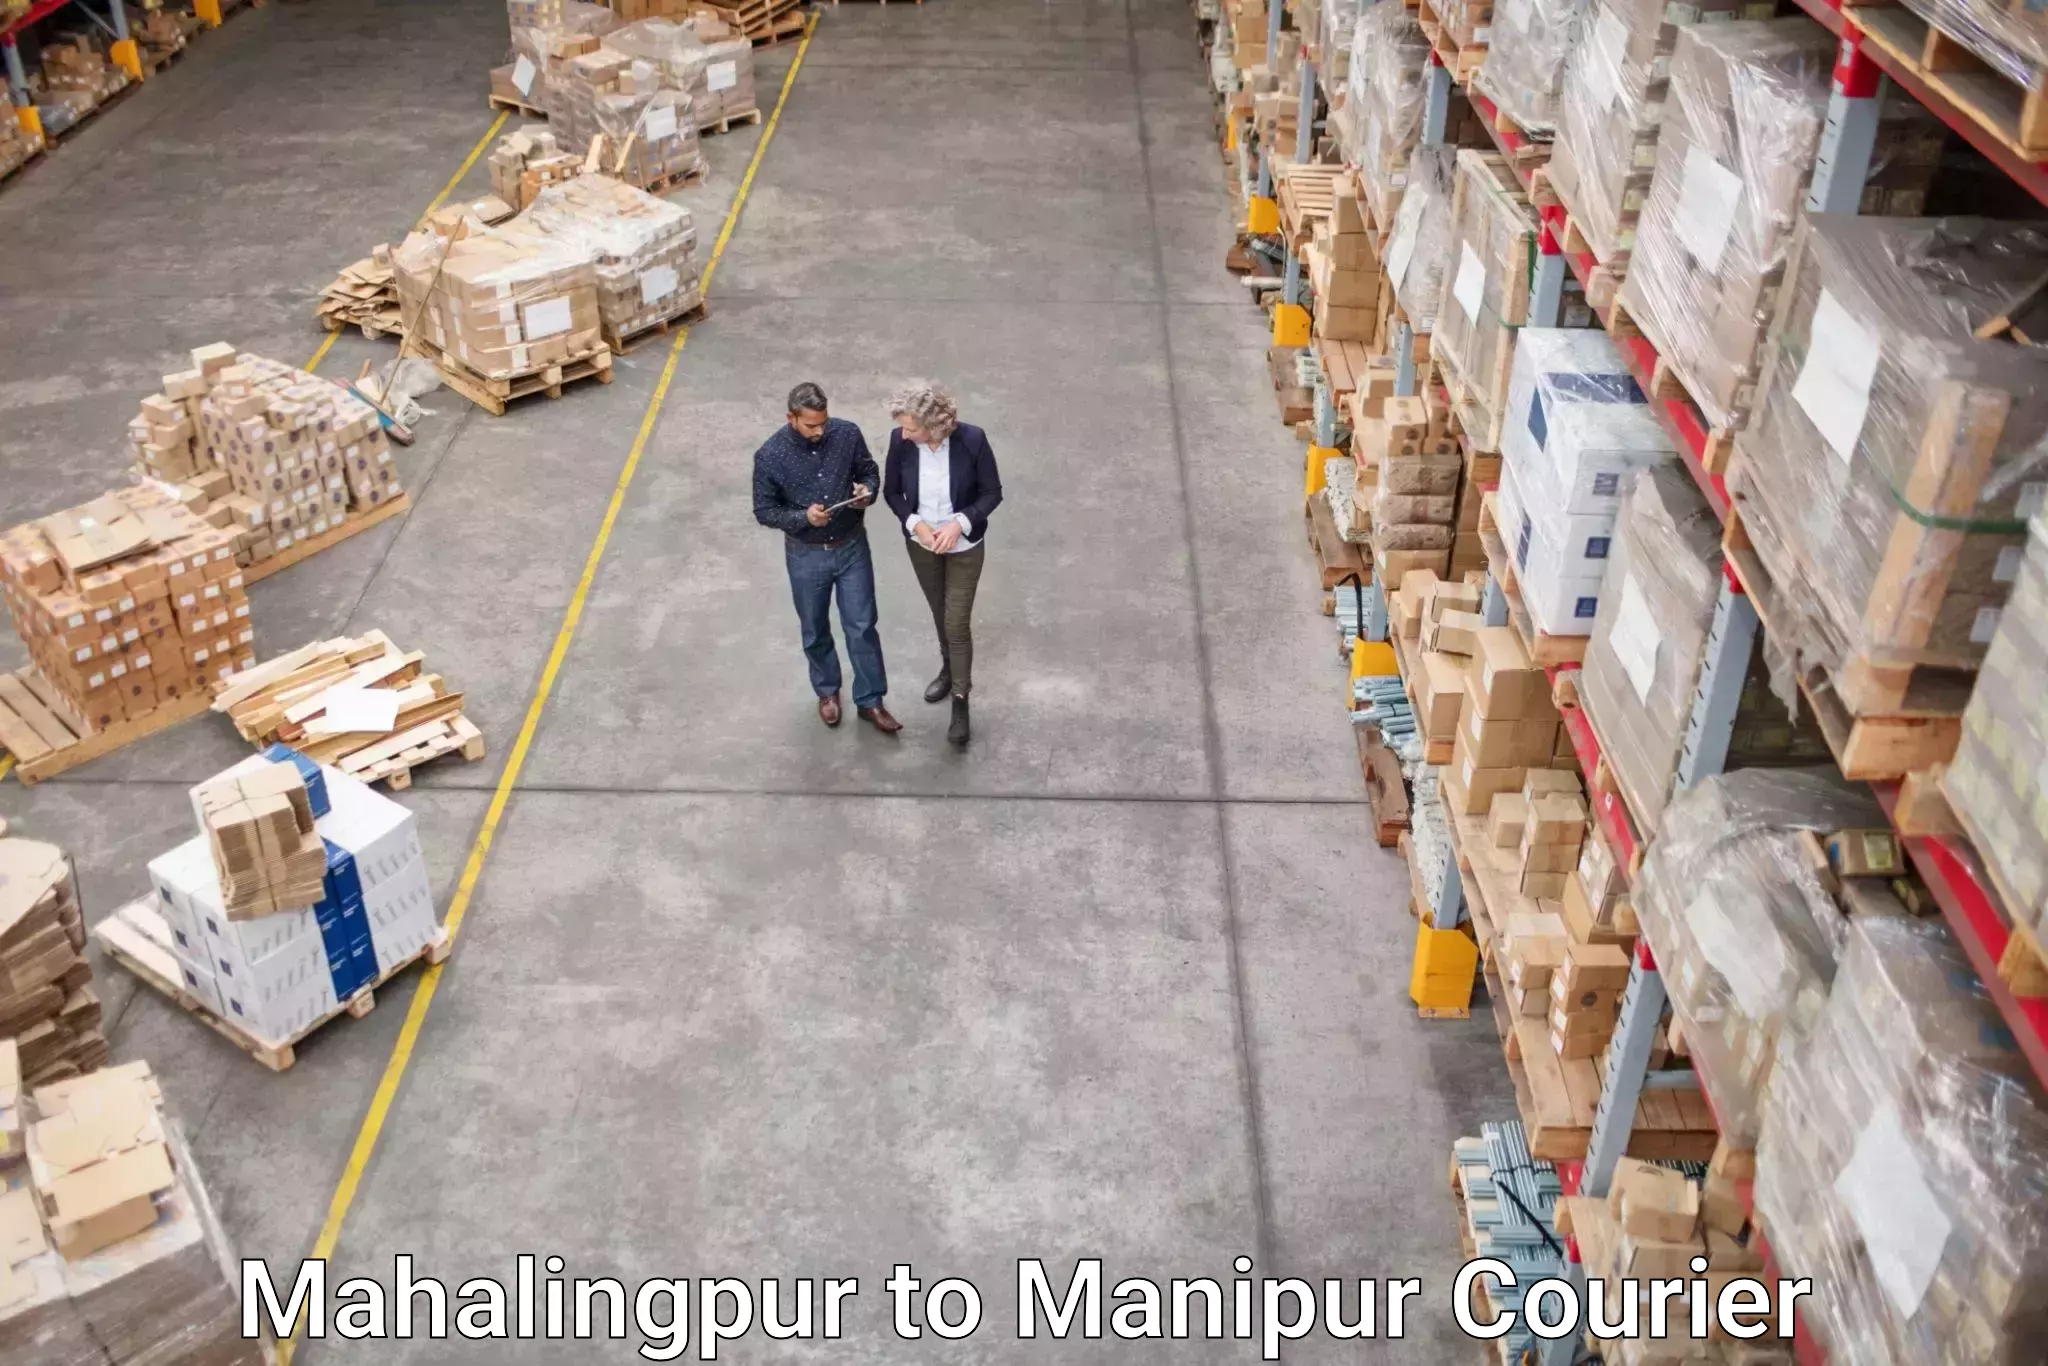 Digital courier platforms Mahalingpur to Churachandpur